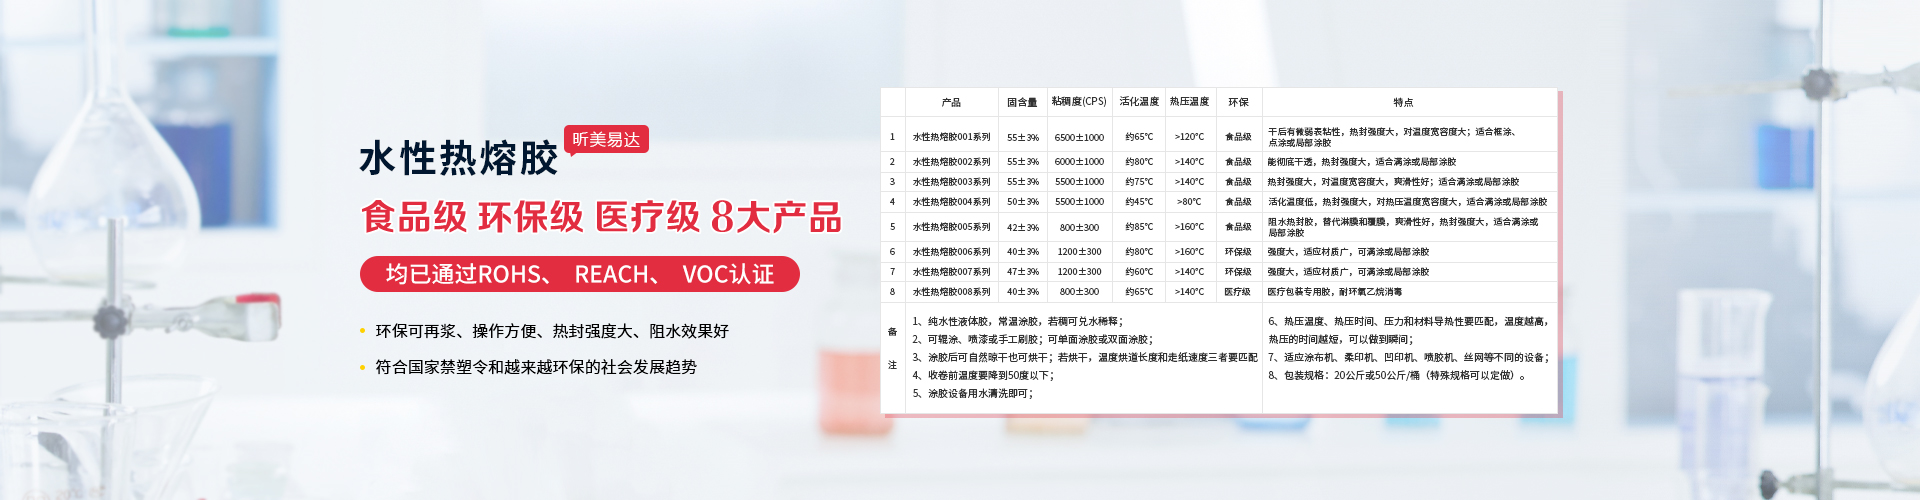 kaiyun188
专业生产水性胶,胶水等系列产品.